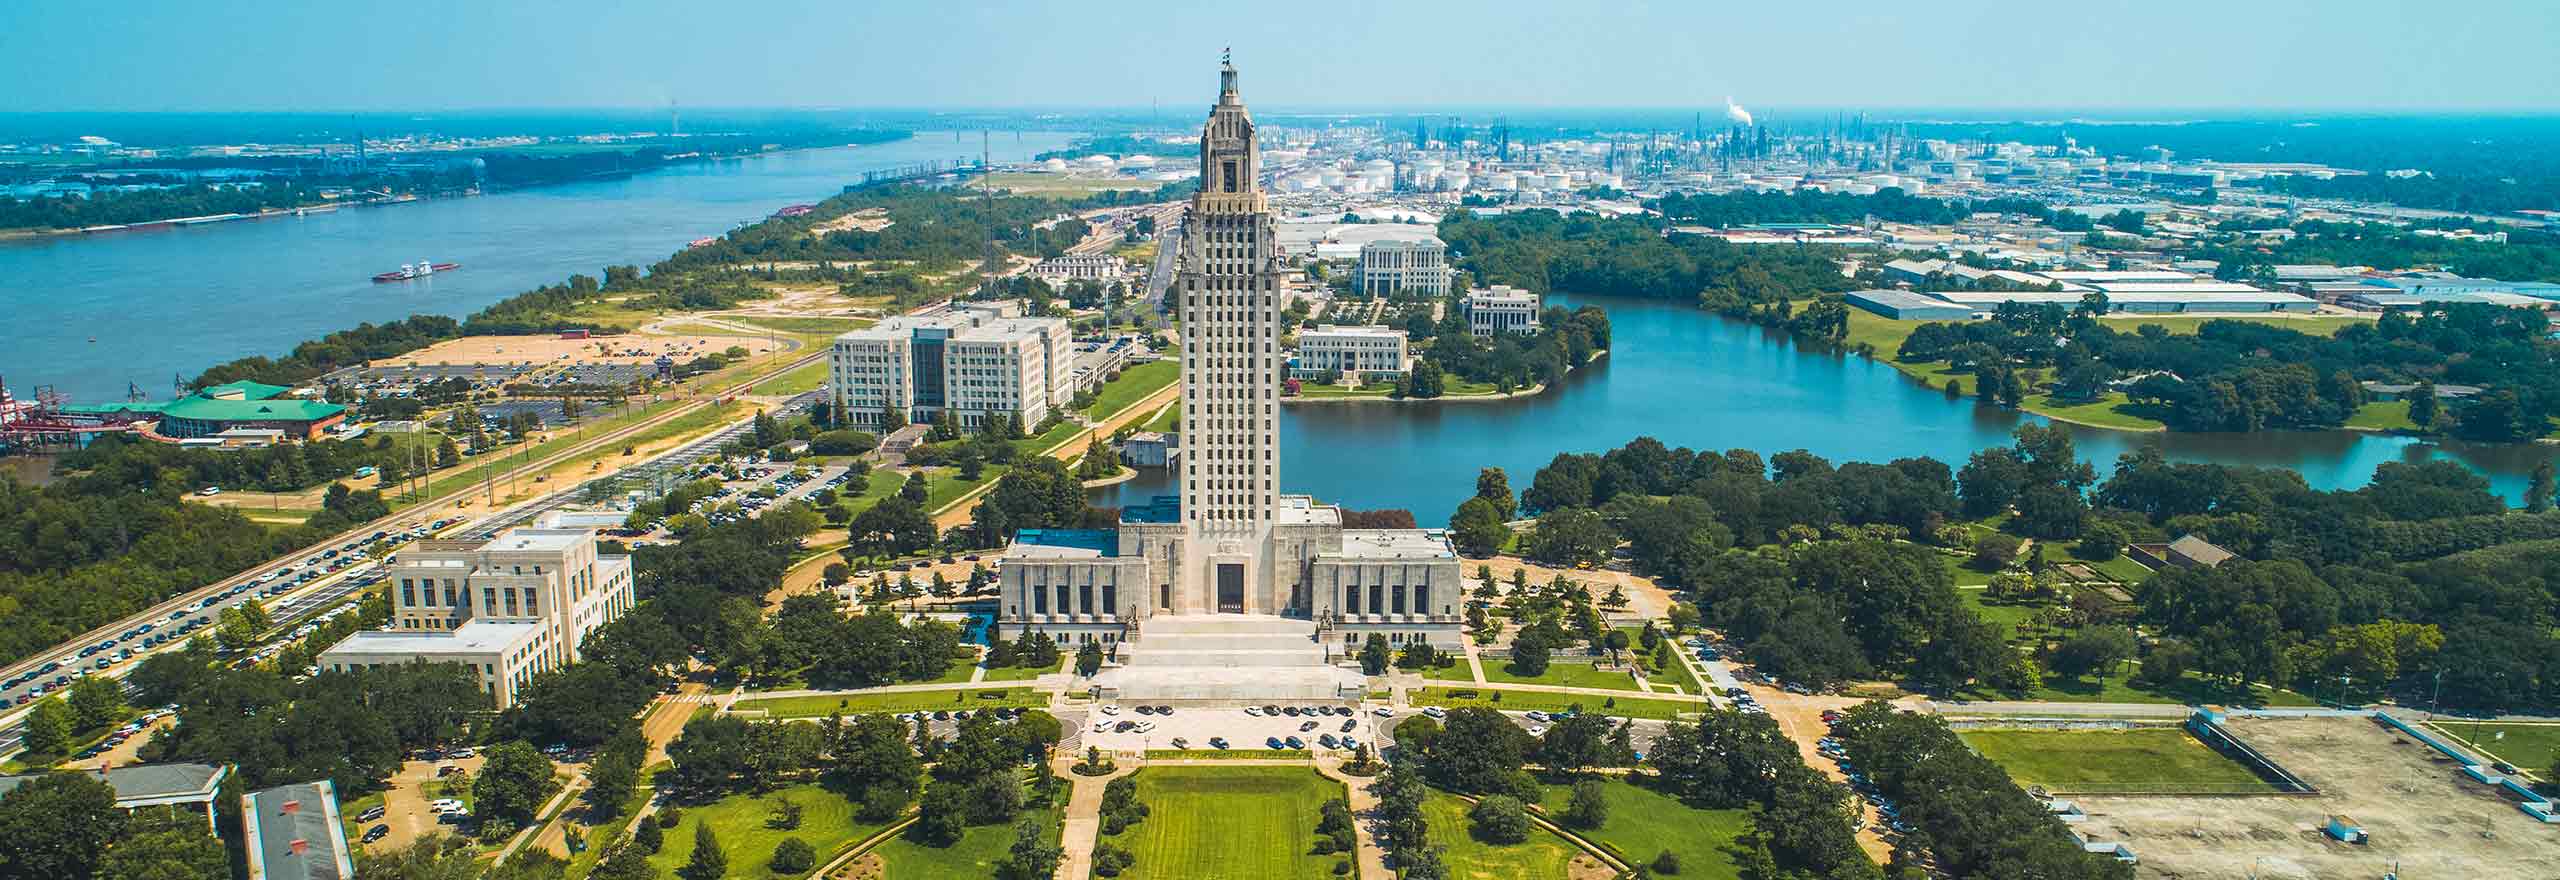 Luftbild: State Capitol Park in Baton Rouge, L.A., USA